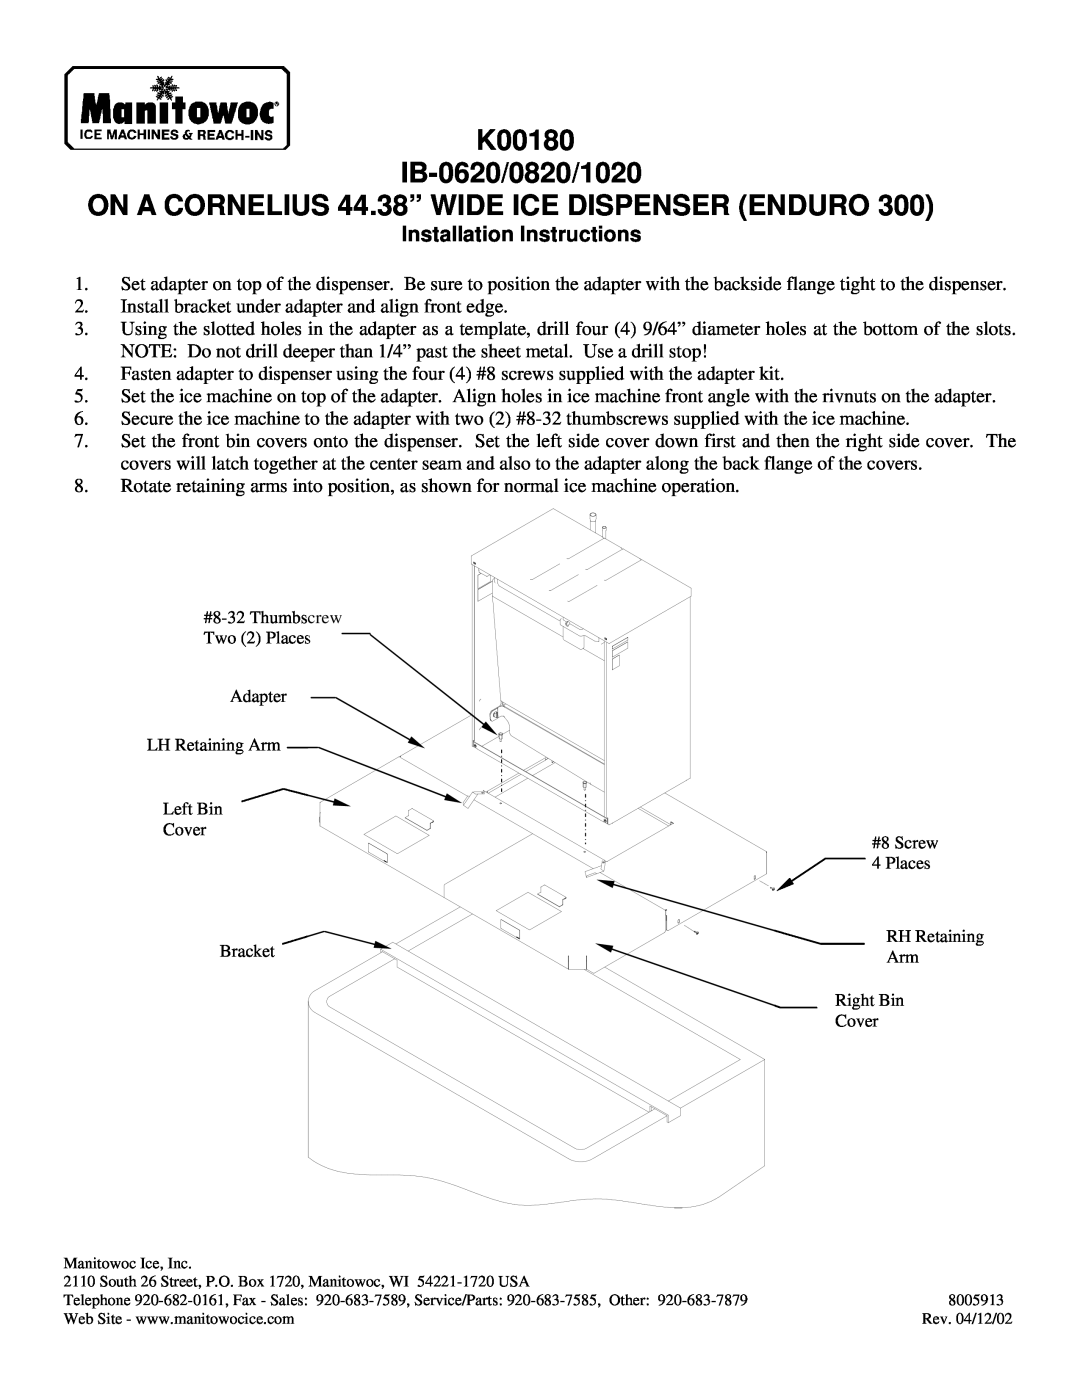 Manitowoc Ice installation instructions K00180 IB-0620/0820/1020, ON A CORNELIUS 44.38” WIDE ICE DISPENSER ENDURO 